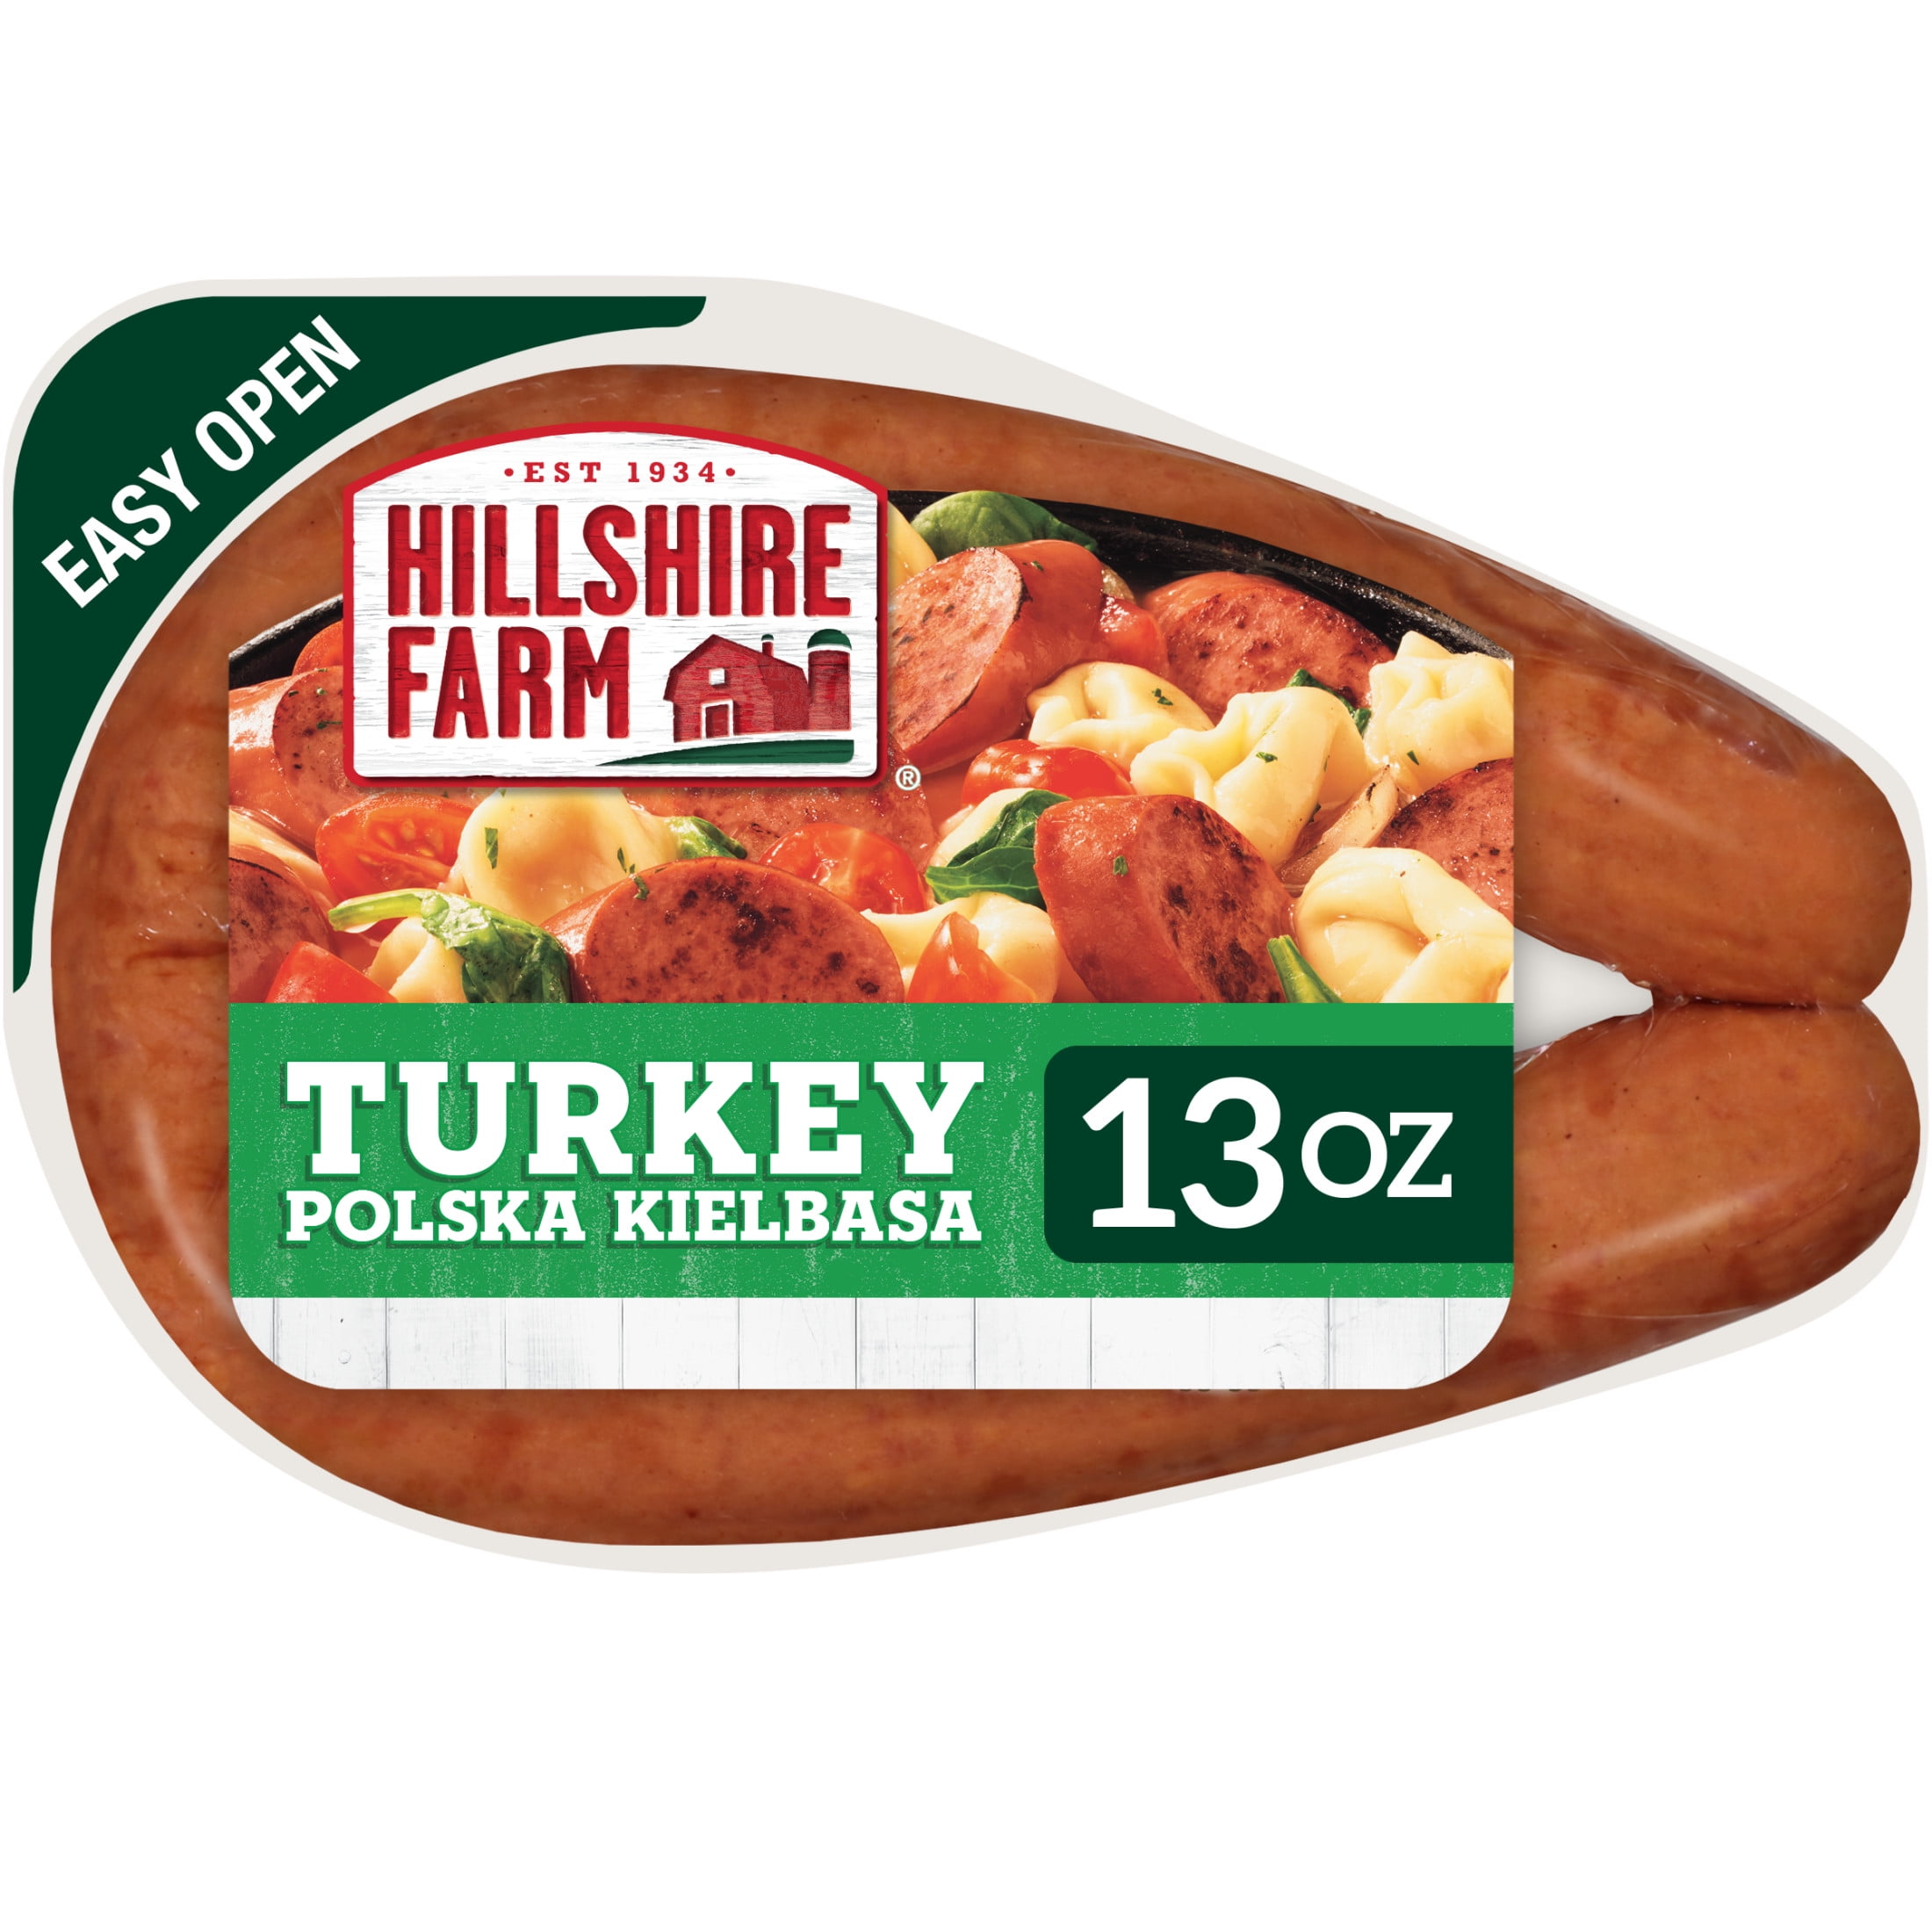 Hillshire Farm Turkey Polska Kielbasa